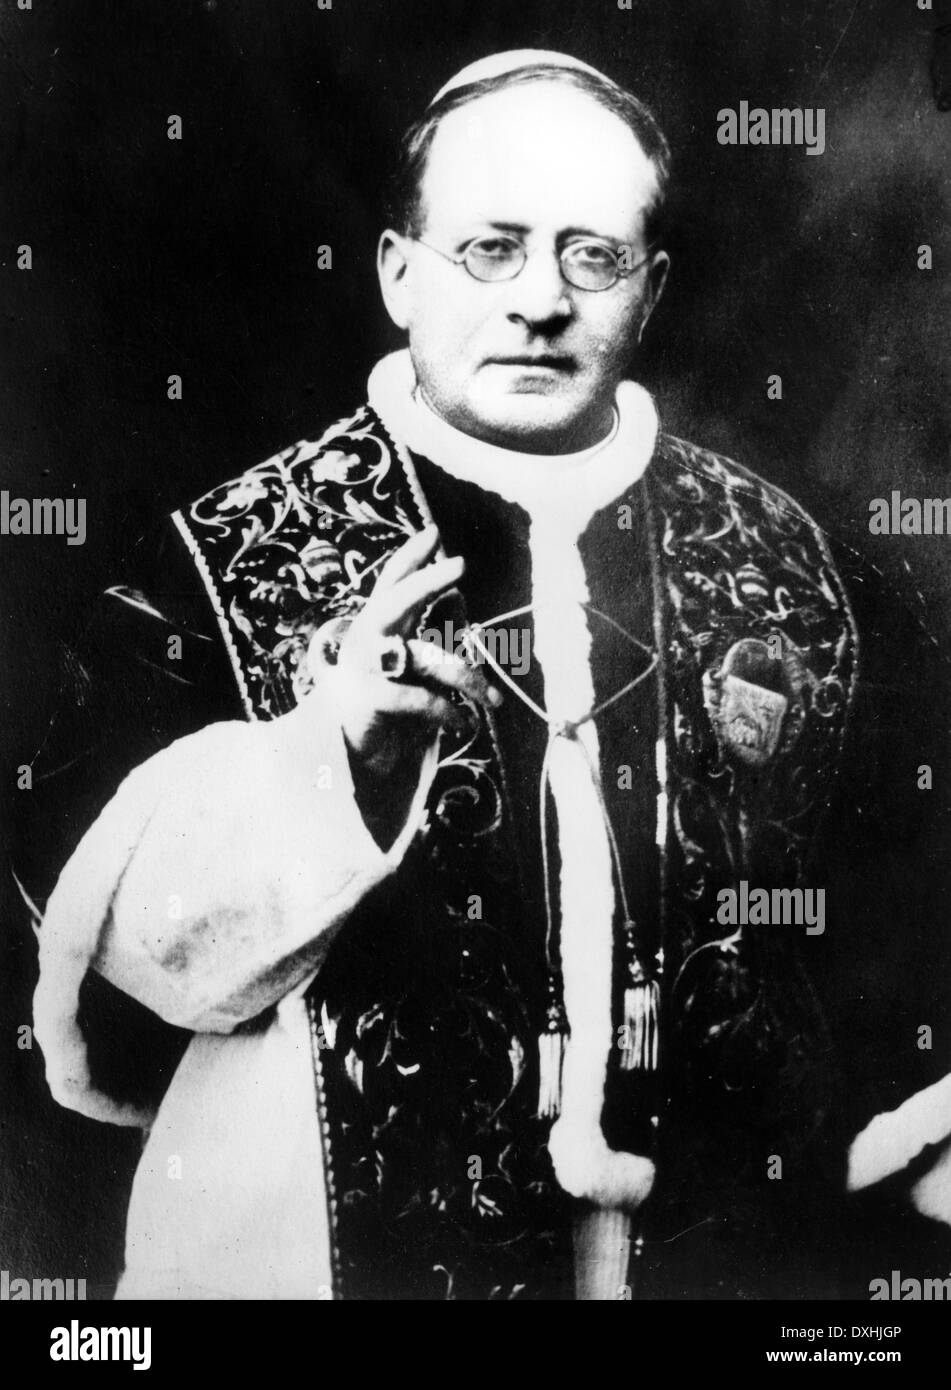 POPE PIUS XI (1857-1939) in 1930 Stock Photo